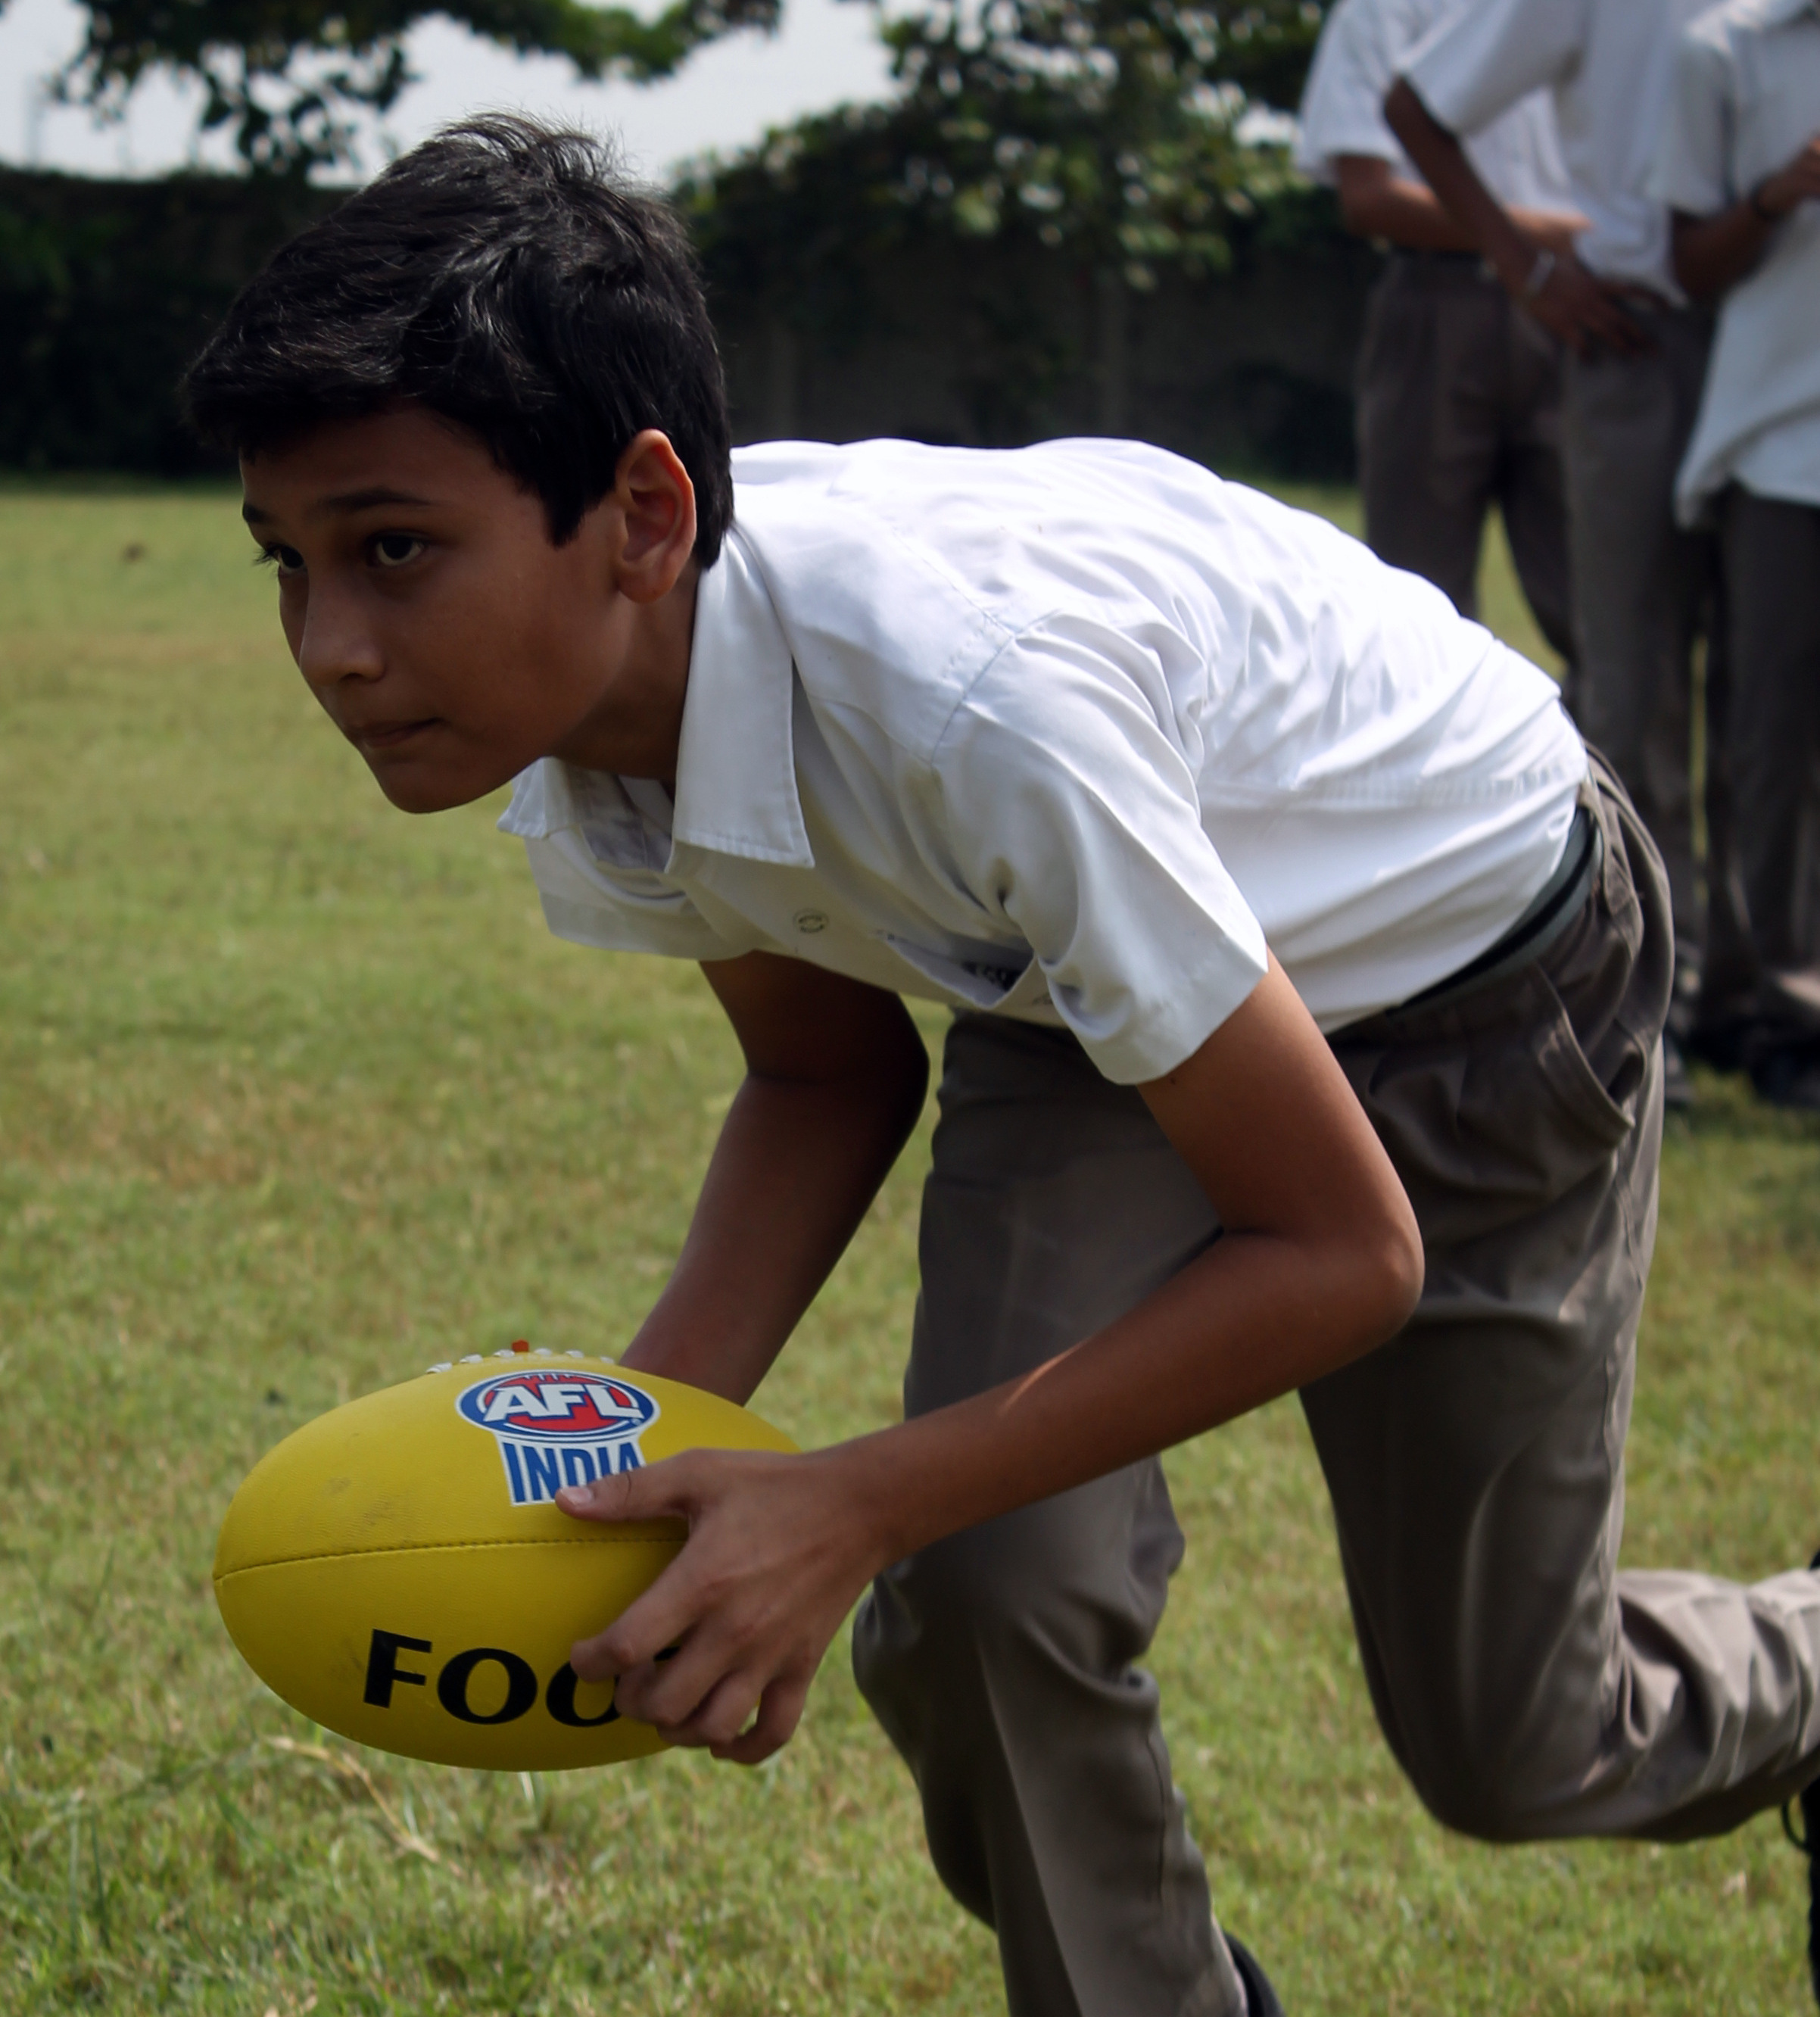 A student of Bhavan's Raipur playing Footy